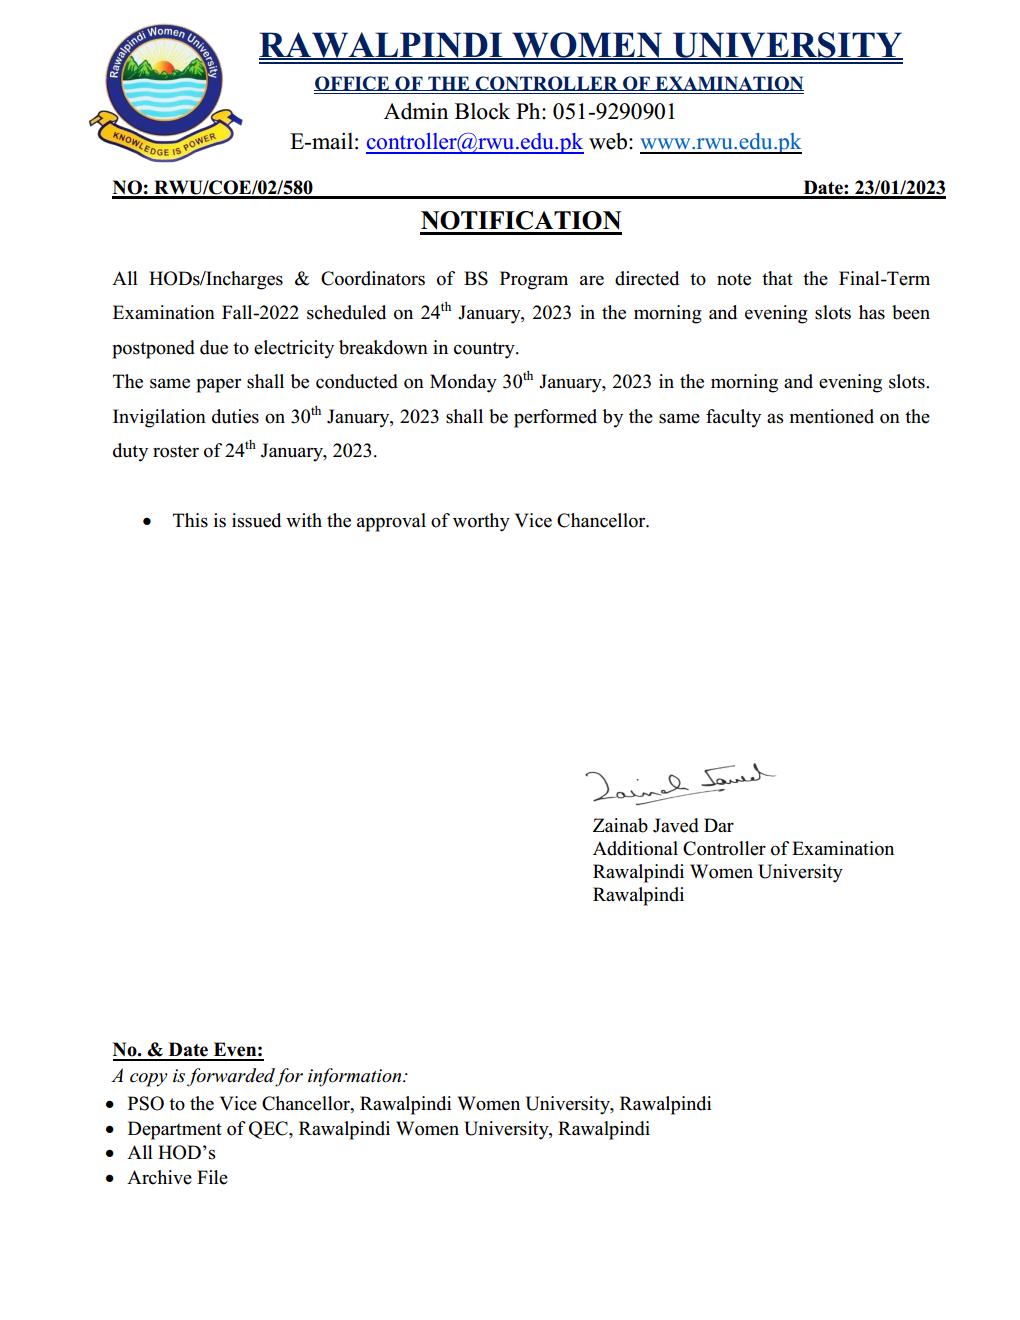 Notification Electricity Break Down Rawalpindi Women University